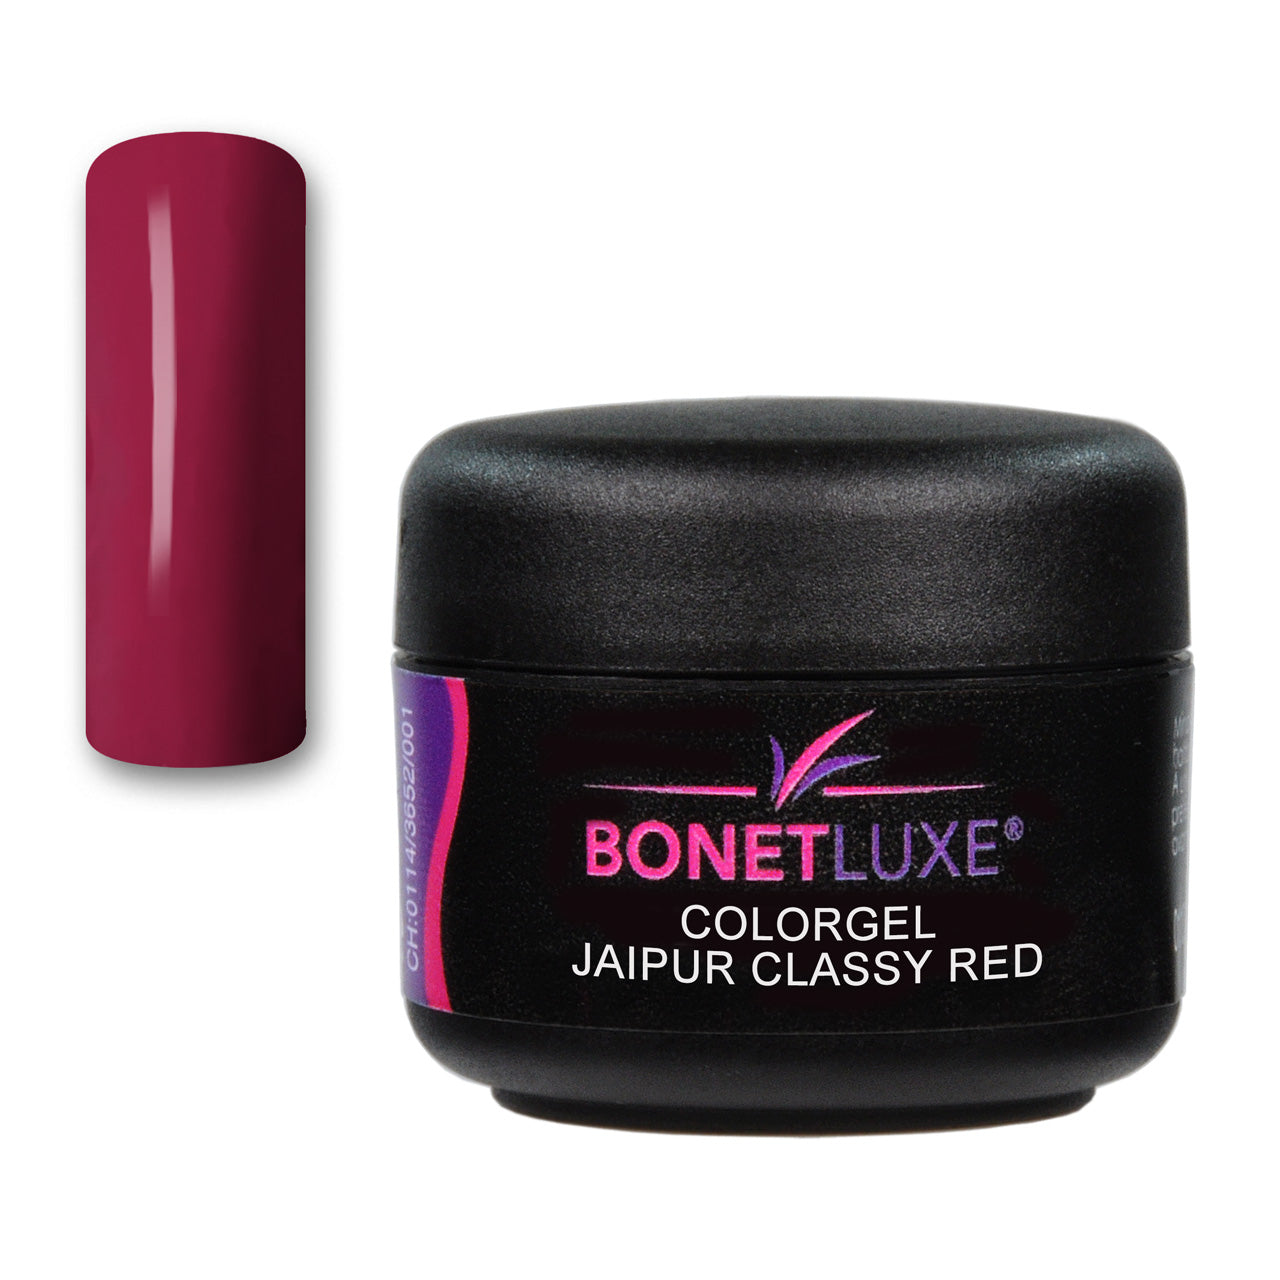 Bonetluxe Colorgel Jaipur Classy Red